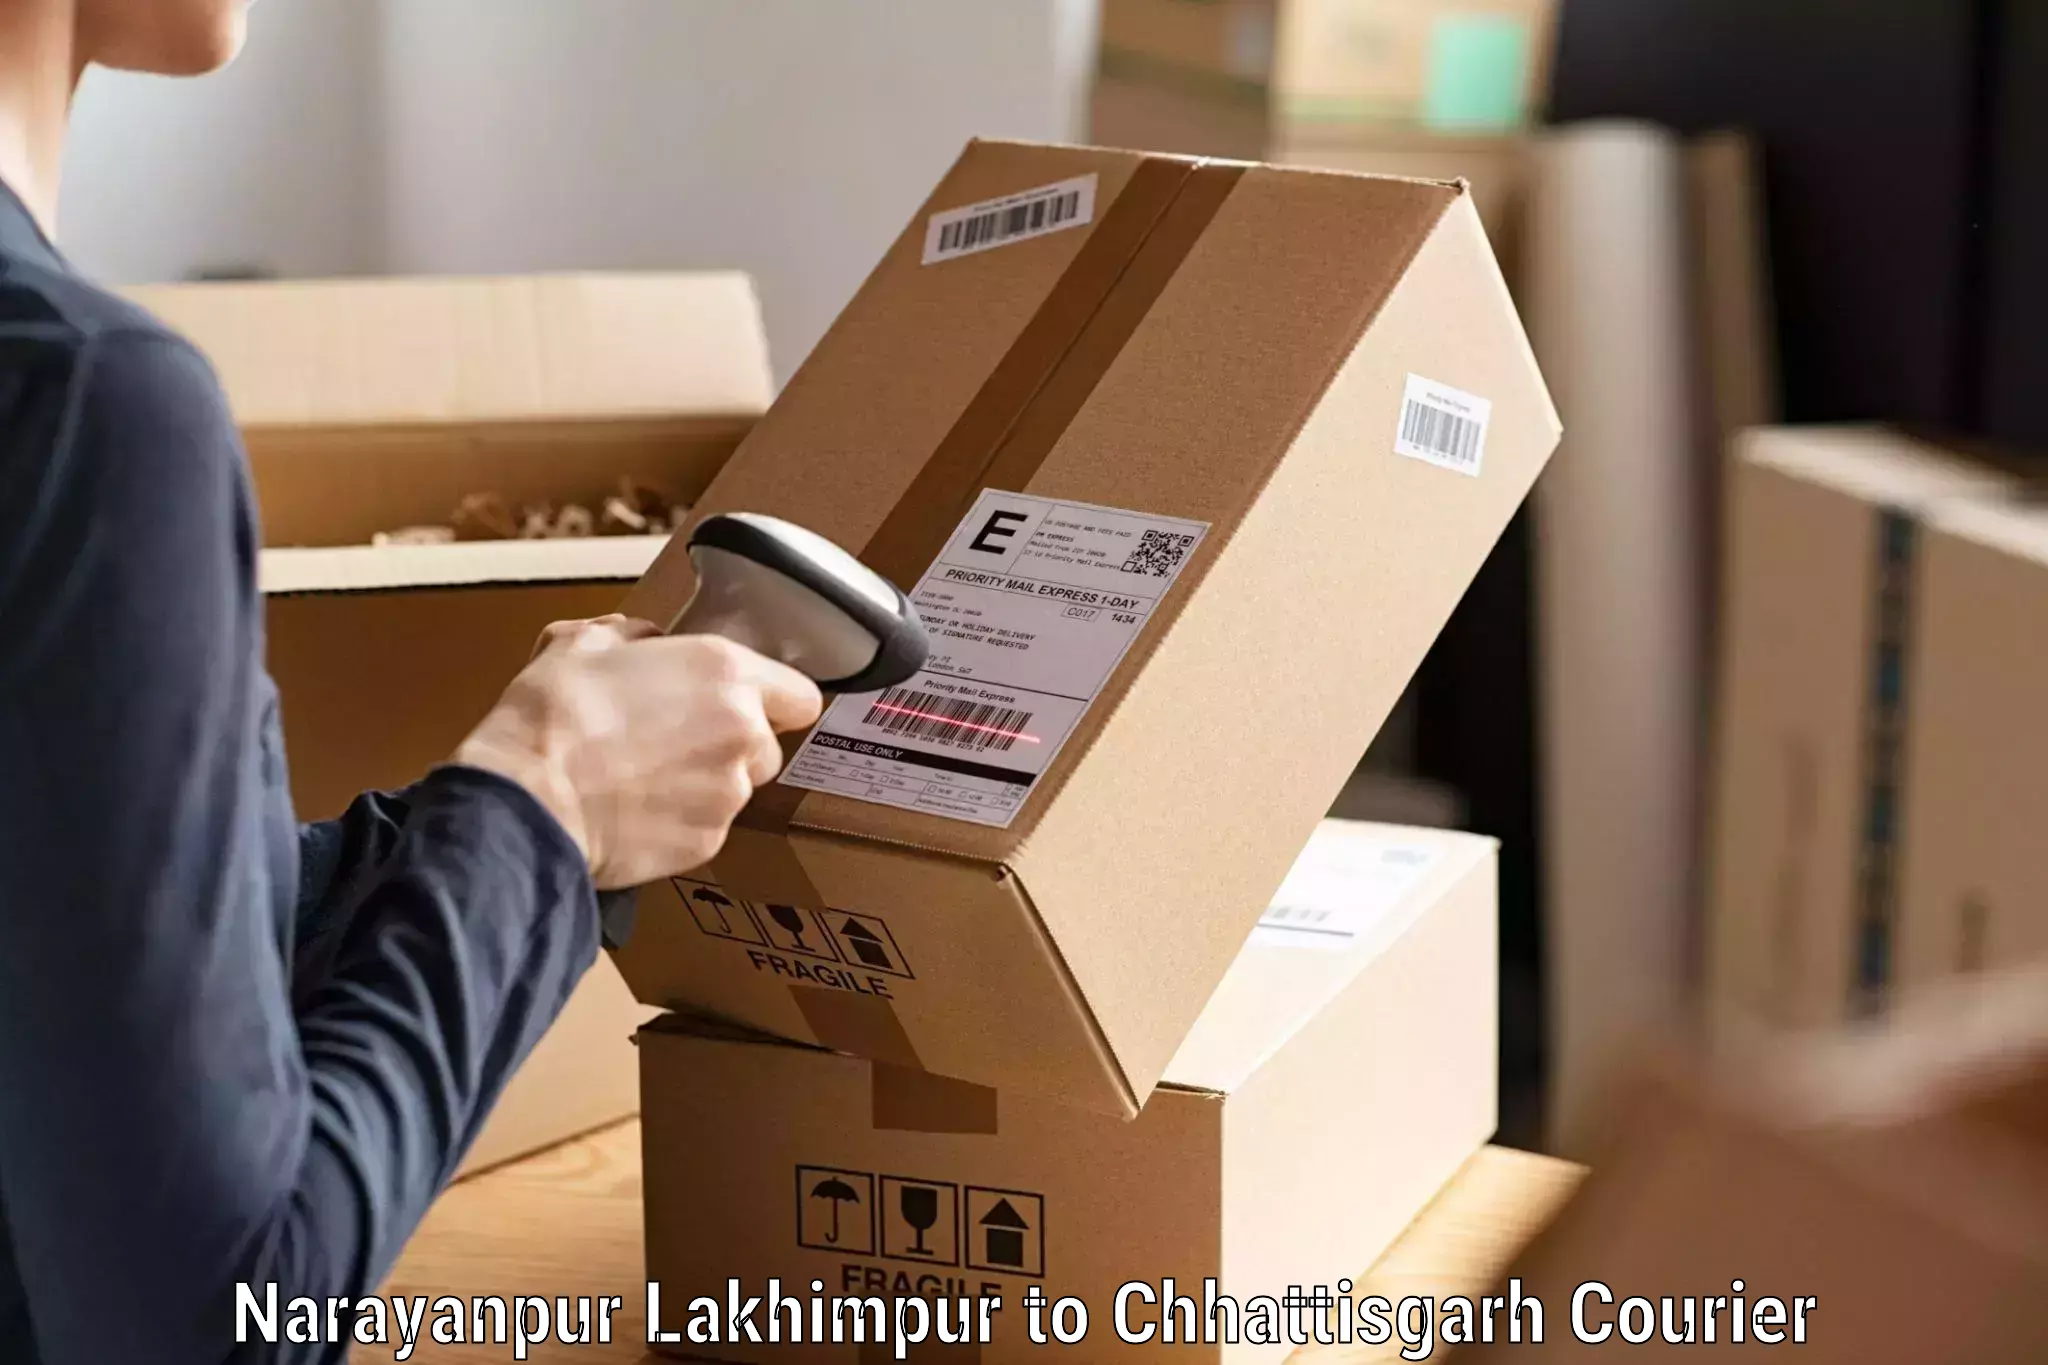 Professional courier handling Narayanpur Lakhimpur to Chhattisgarh